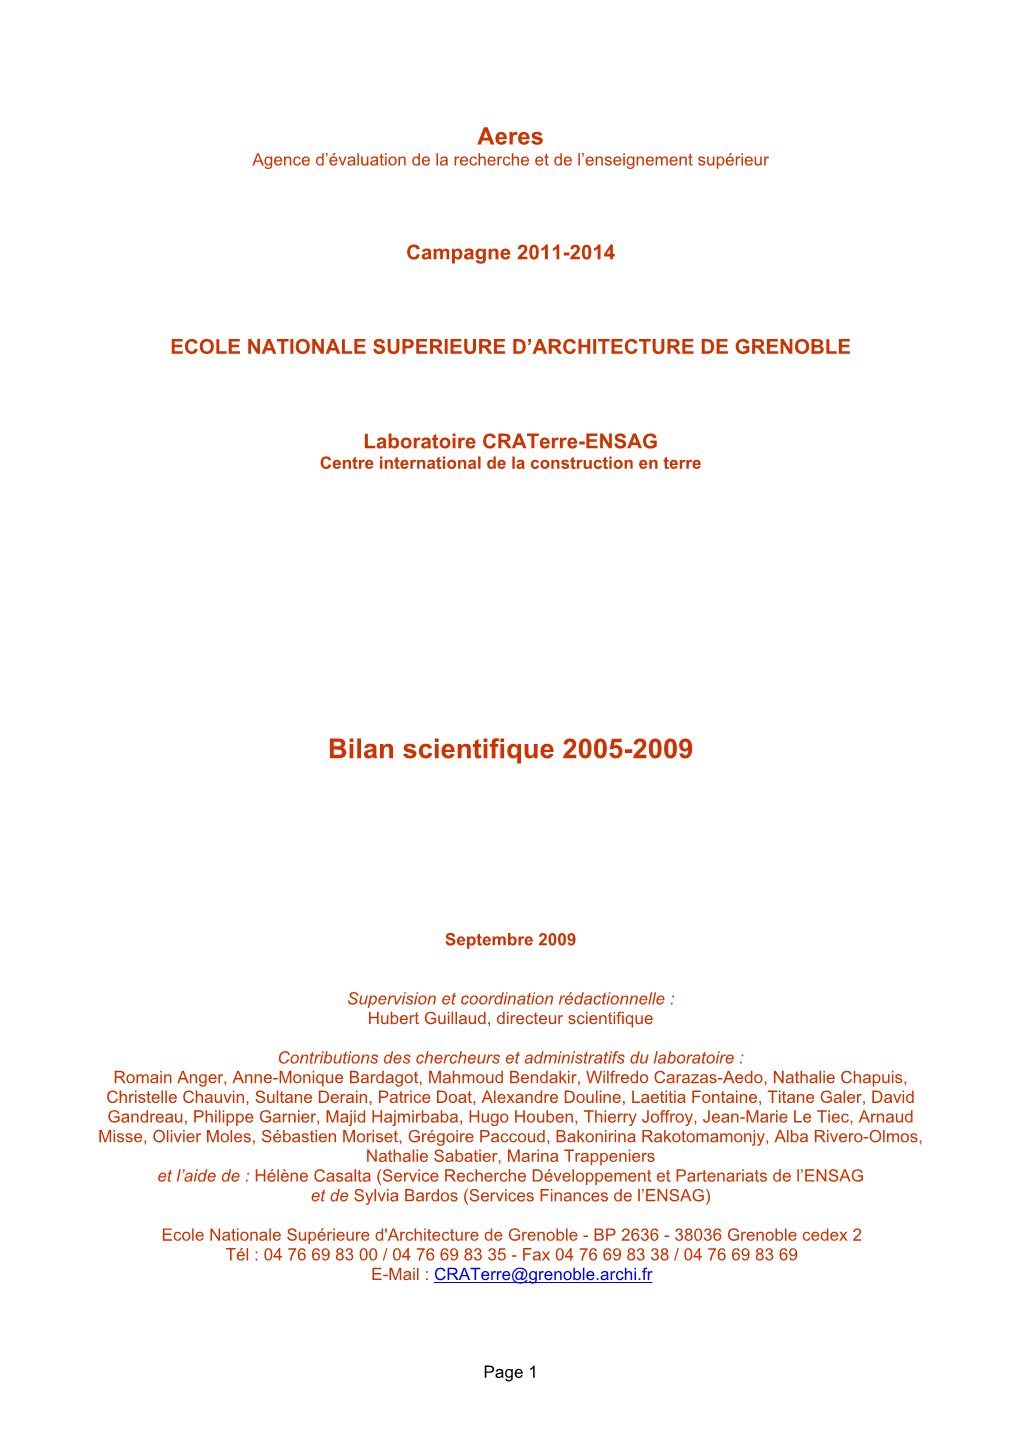 Bilan Scientifique 2005-2009